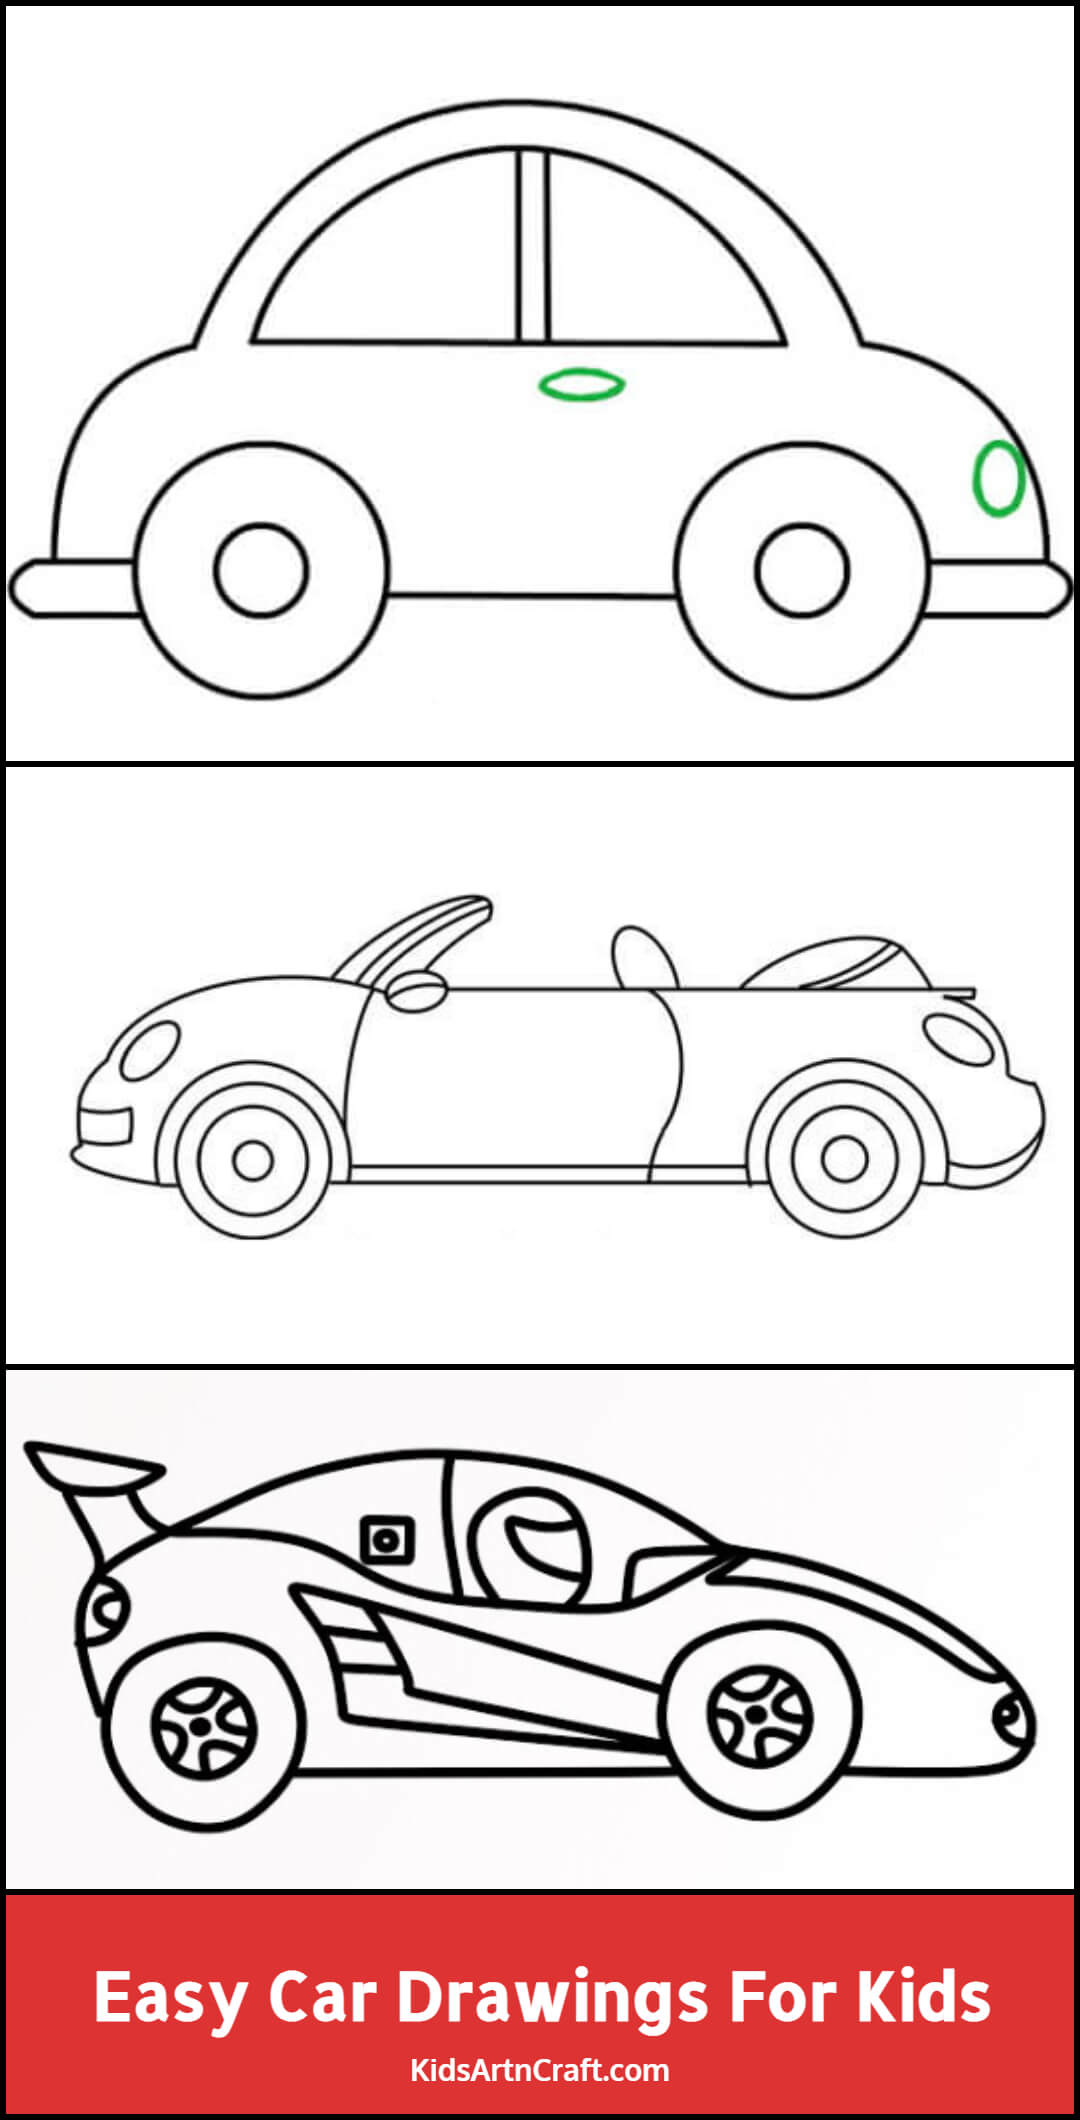 Easy Car Drawings for Kids